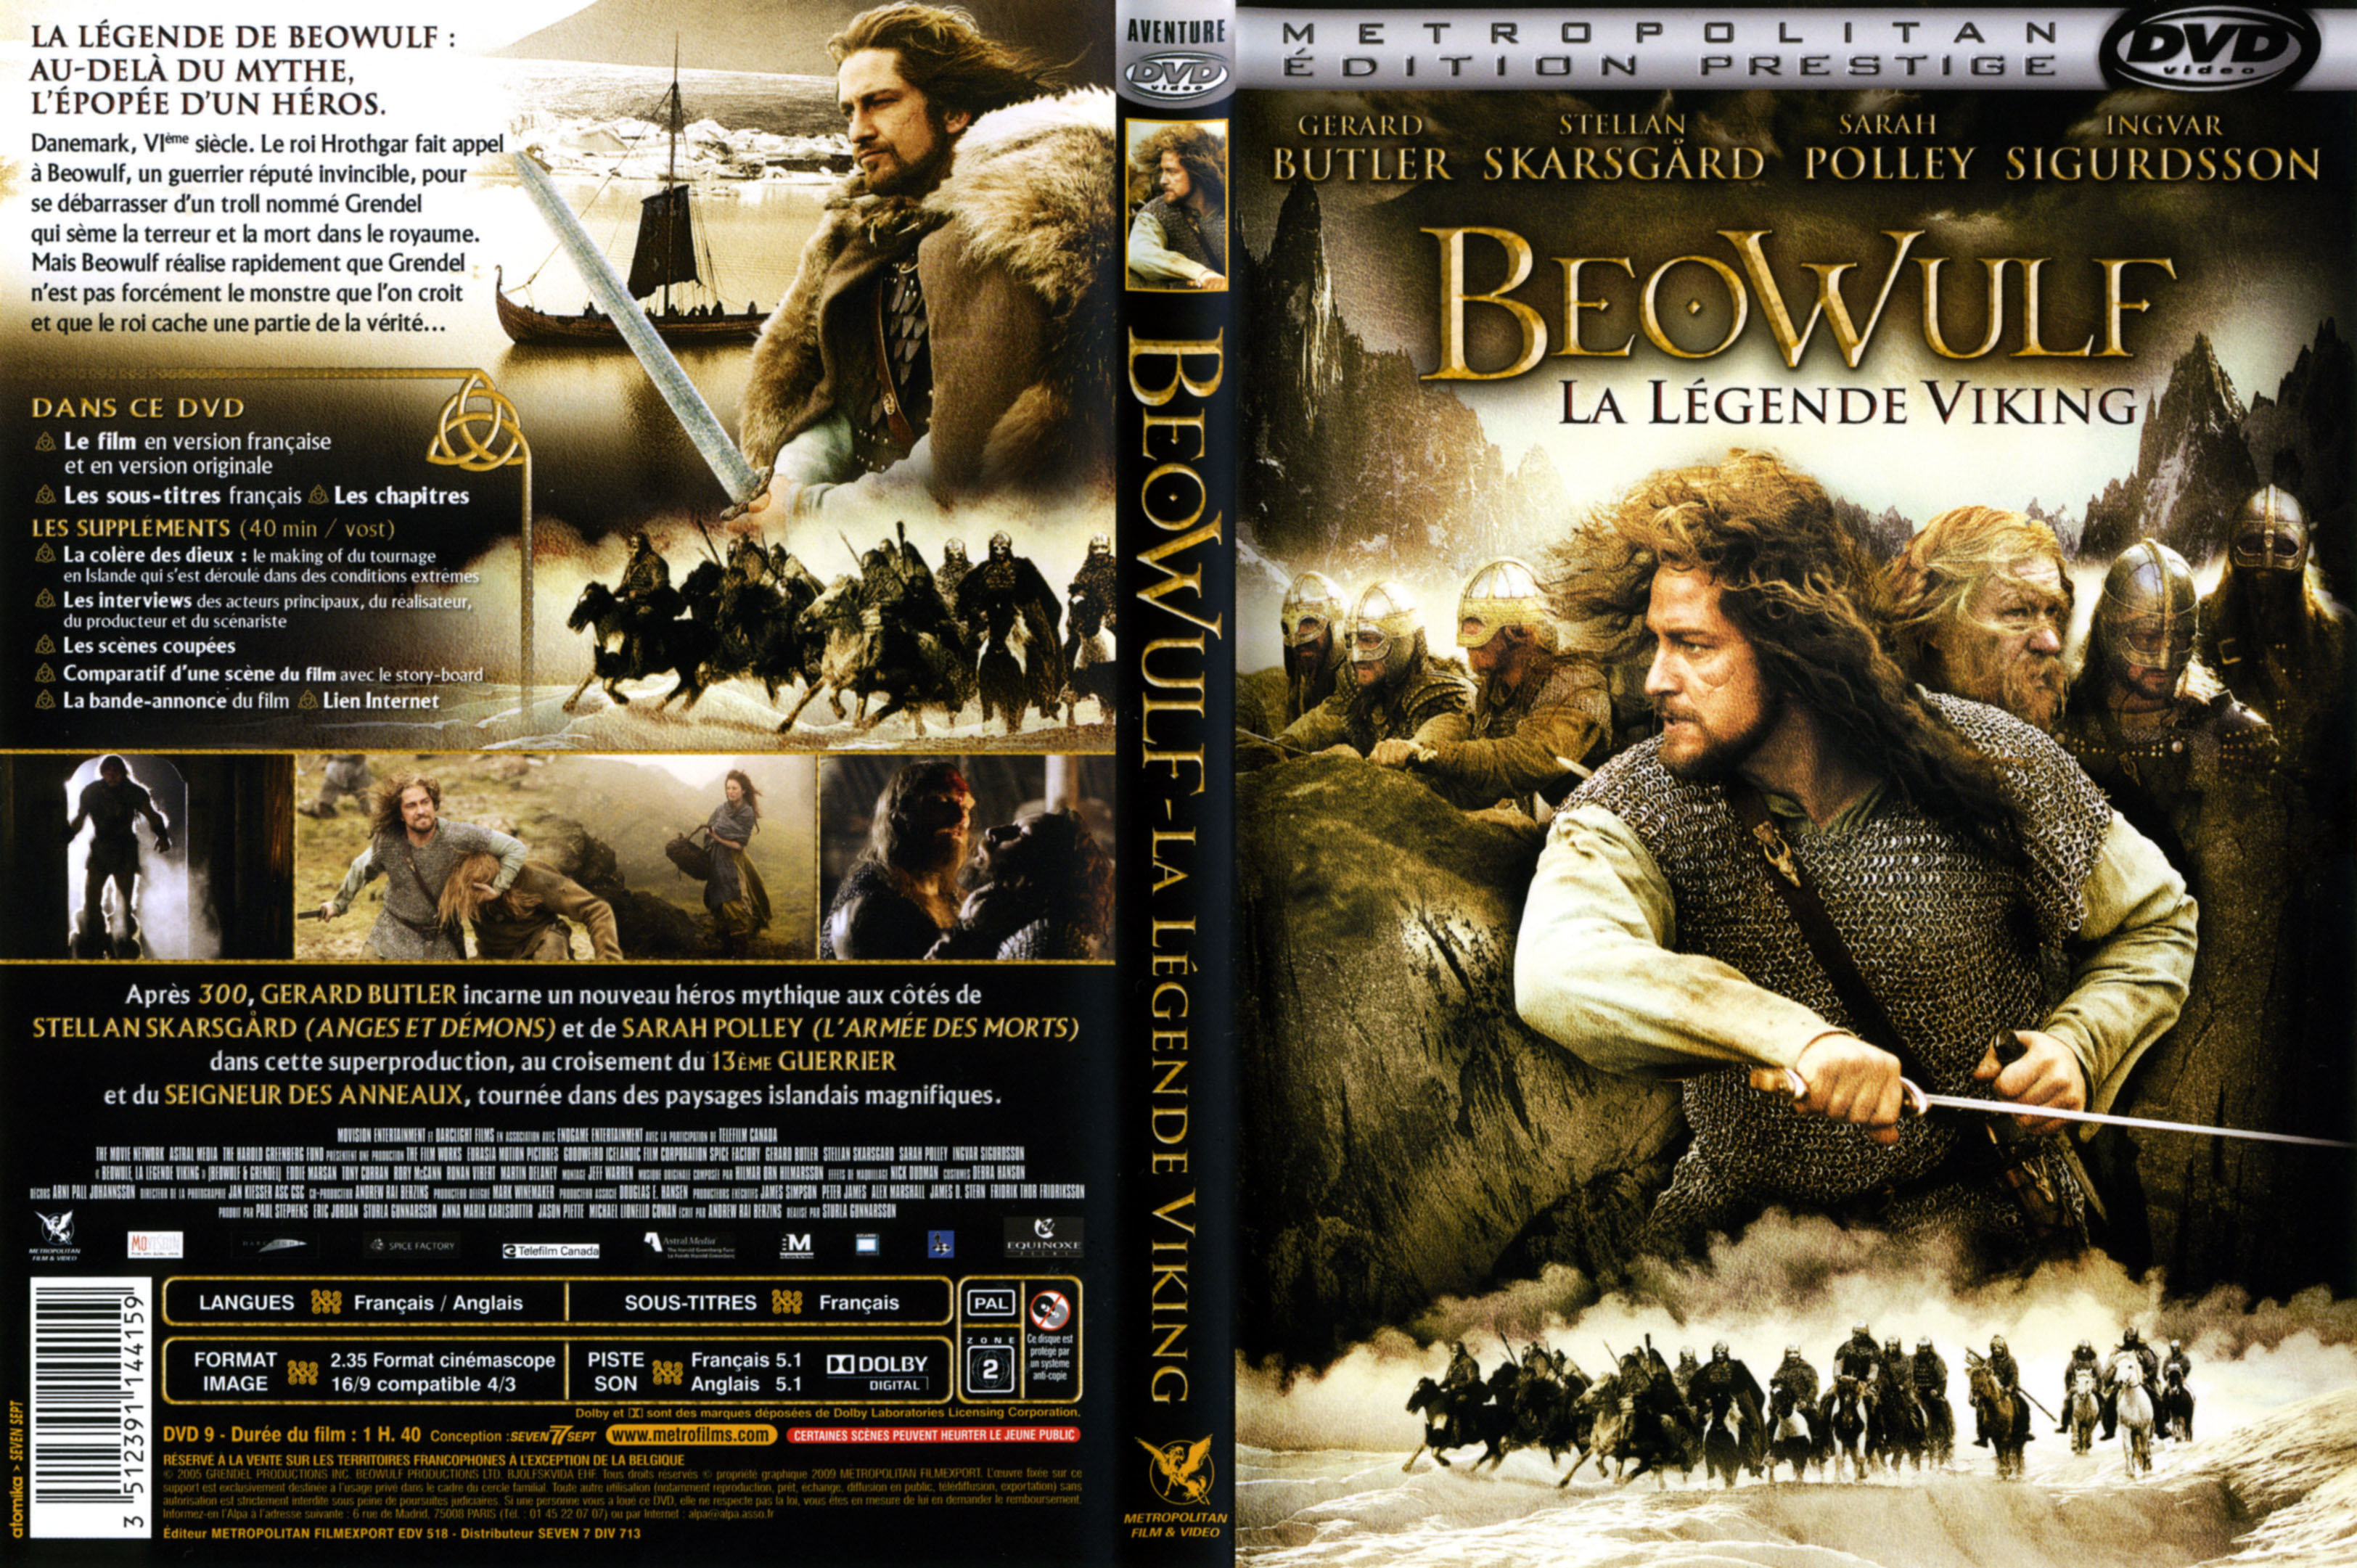 Jaquette DVD BeoWulf la lgende viking